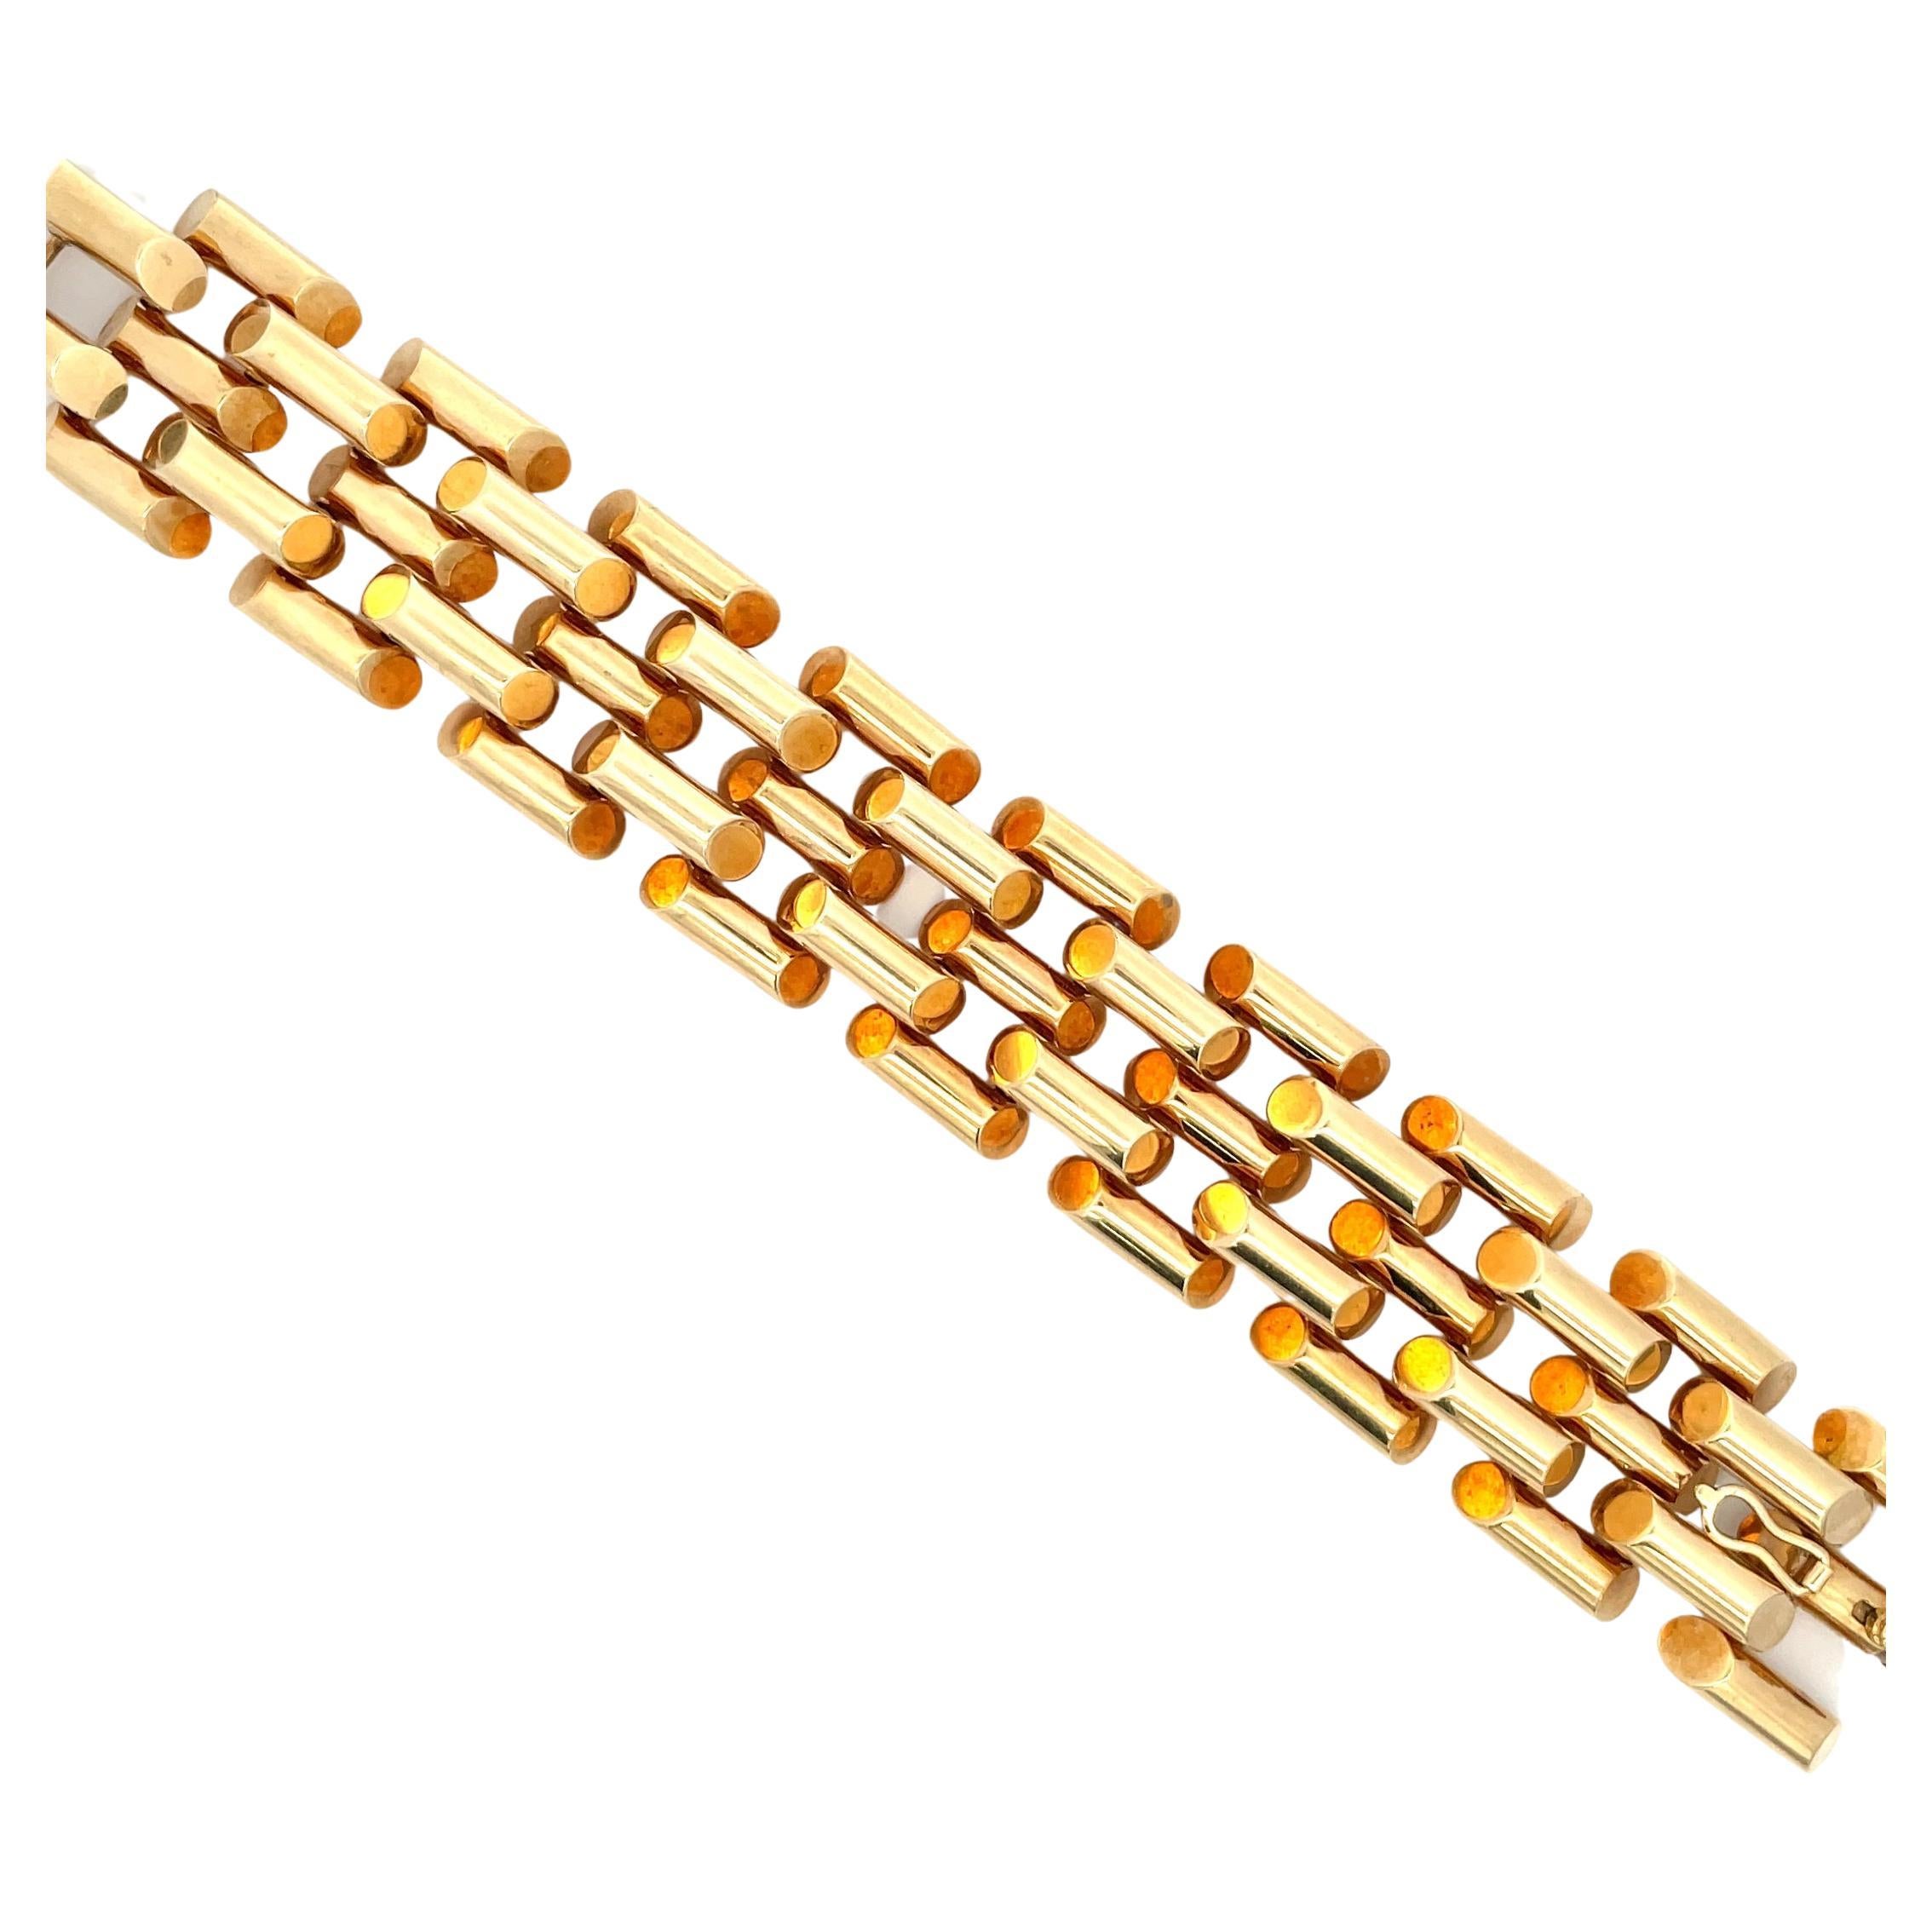 Retro style bracelet featuring 5 rows of a tank motif weighing 69.3 grams in 14 Karat Yellow Gold. 
Great looking bracelet! 